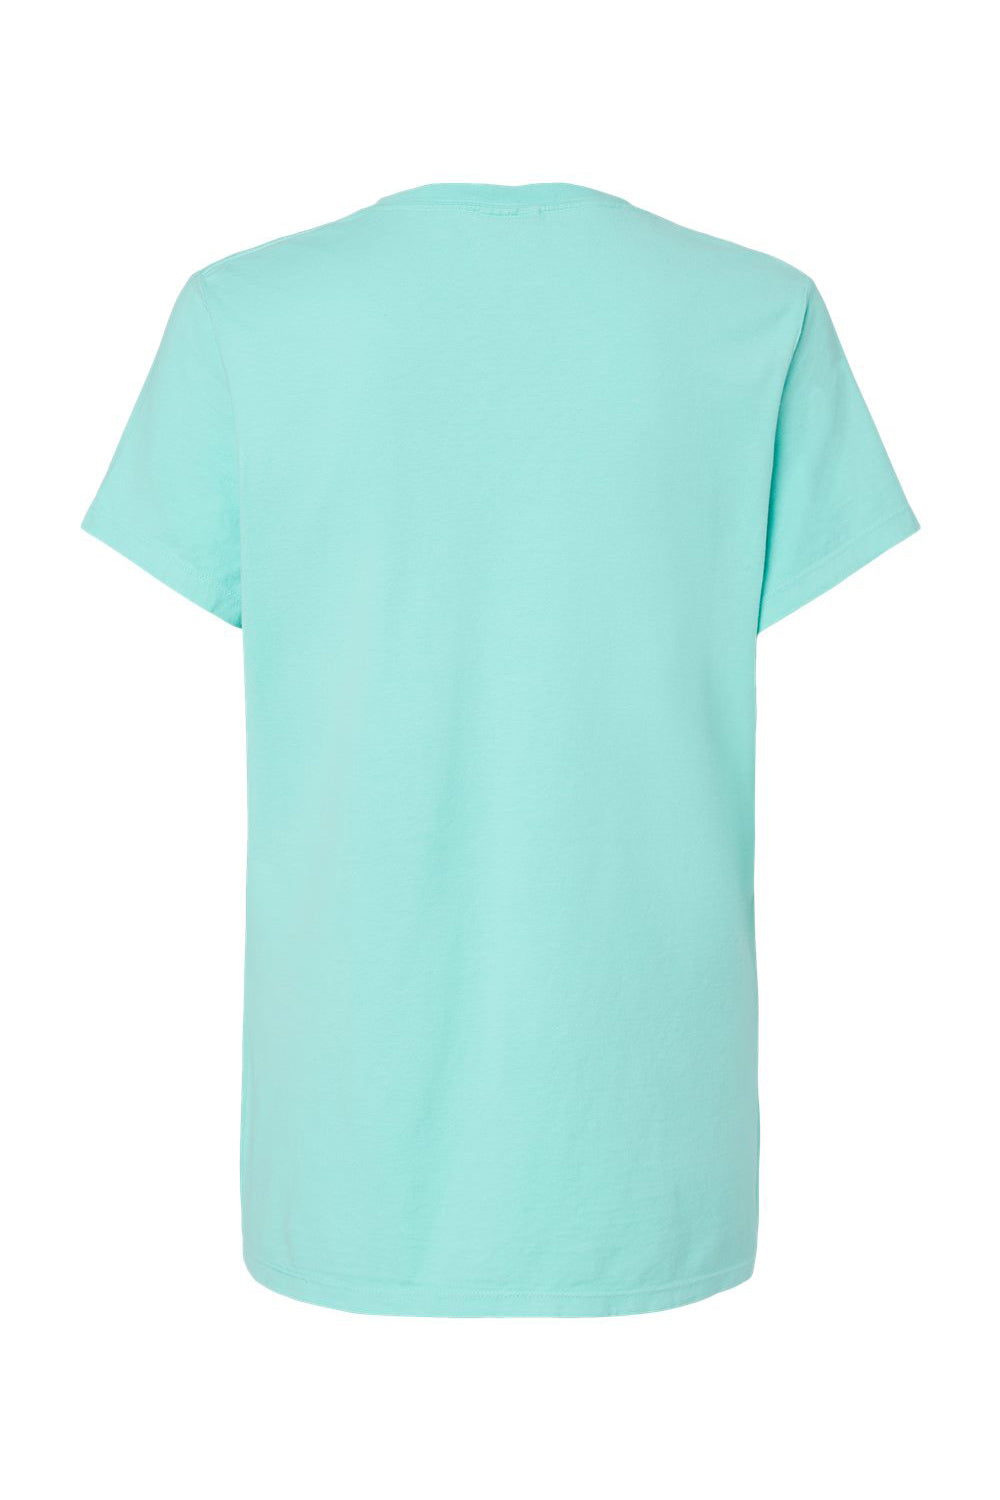 ComfortWash By Hanes GDH125 Mens Garment Dyed Short Sleeve V-Neck T-Shirt Mint Green Flat Back